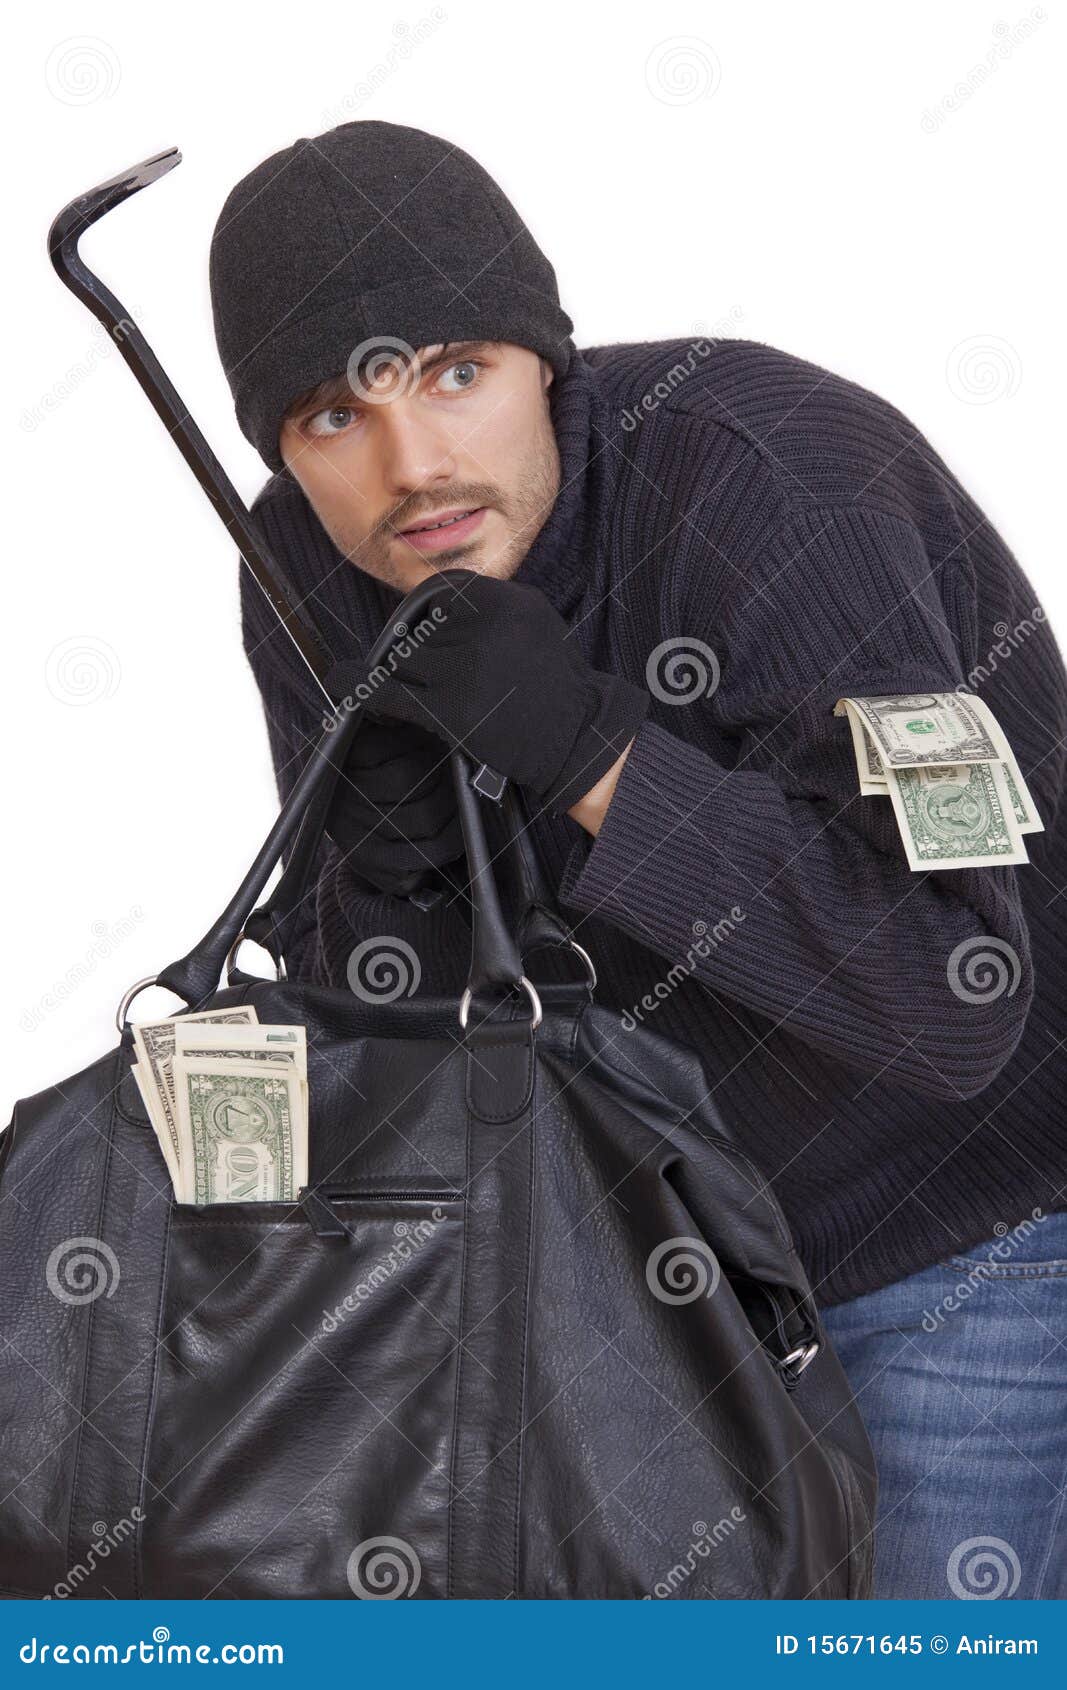 Bank robber stock image. Image of crime, criminal, burglar - 15671645